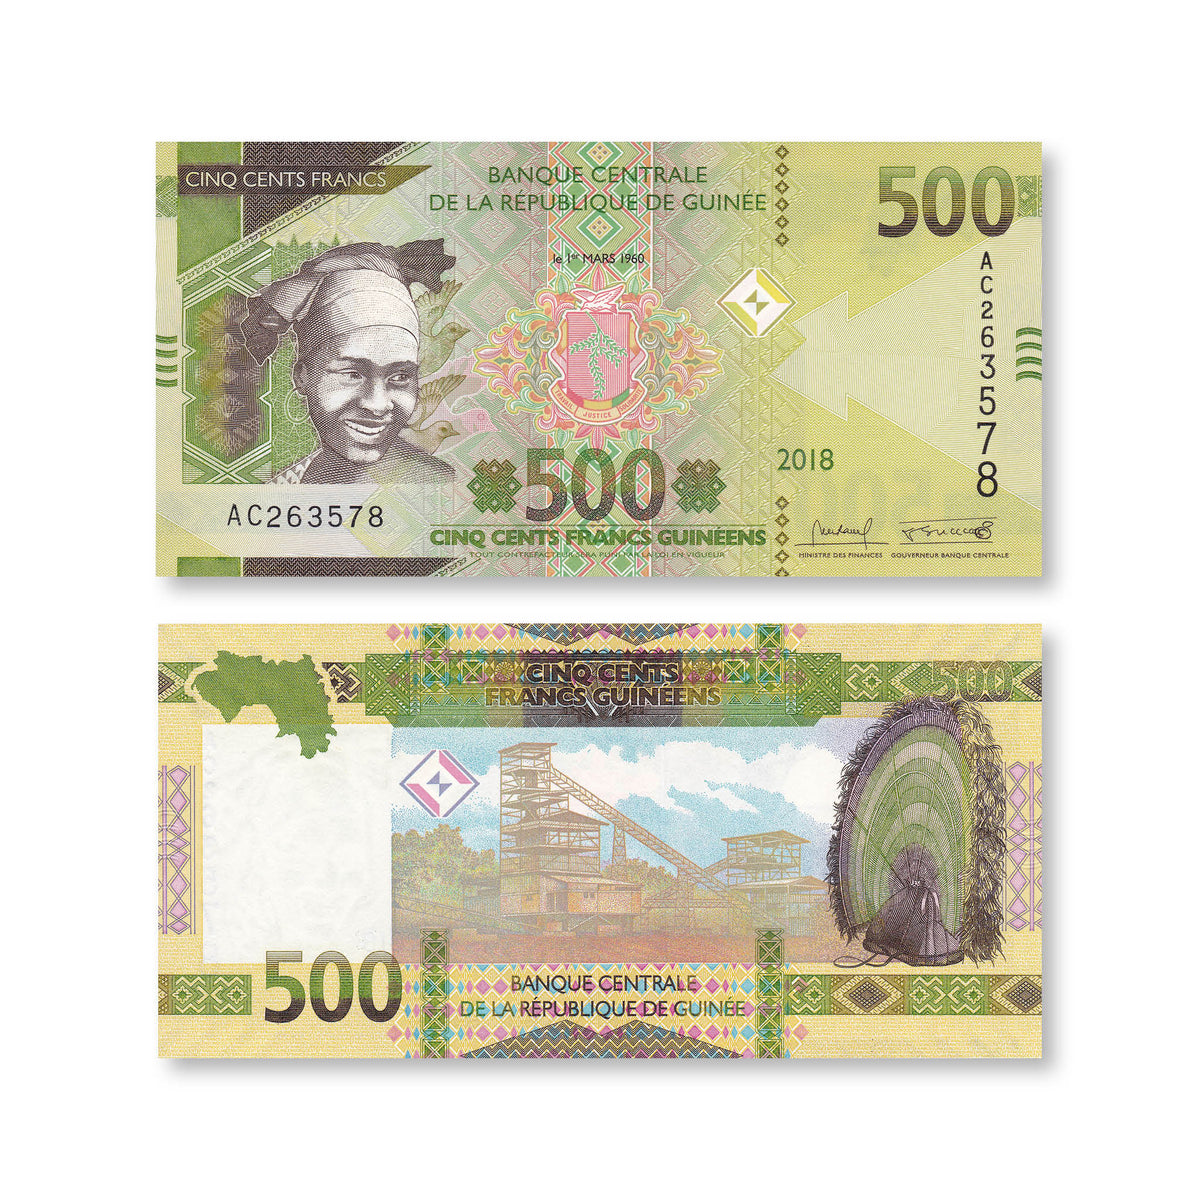 Guinea 500 Francs, 2018, B341.5a, UNC - Robert's World Money - World Banknotes